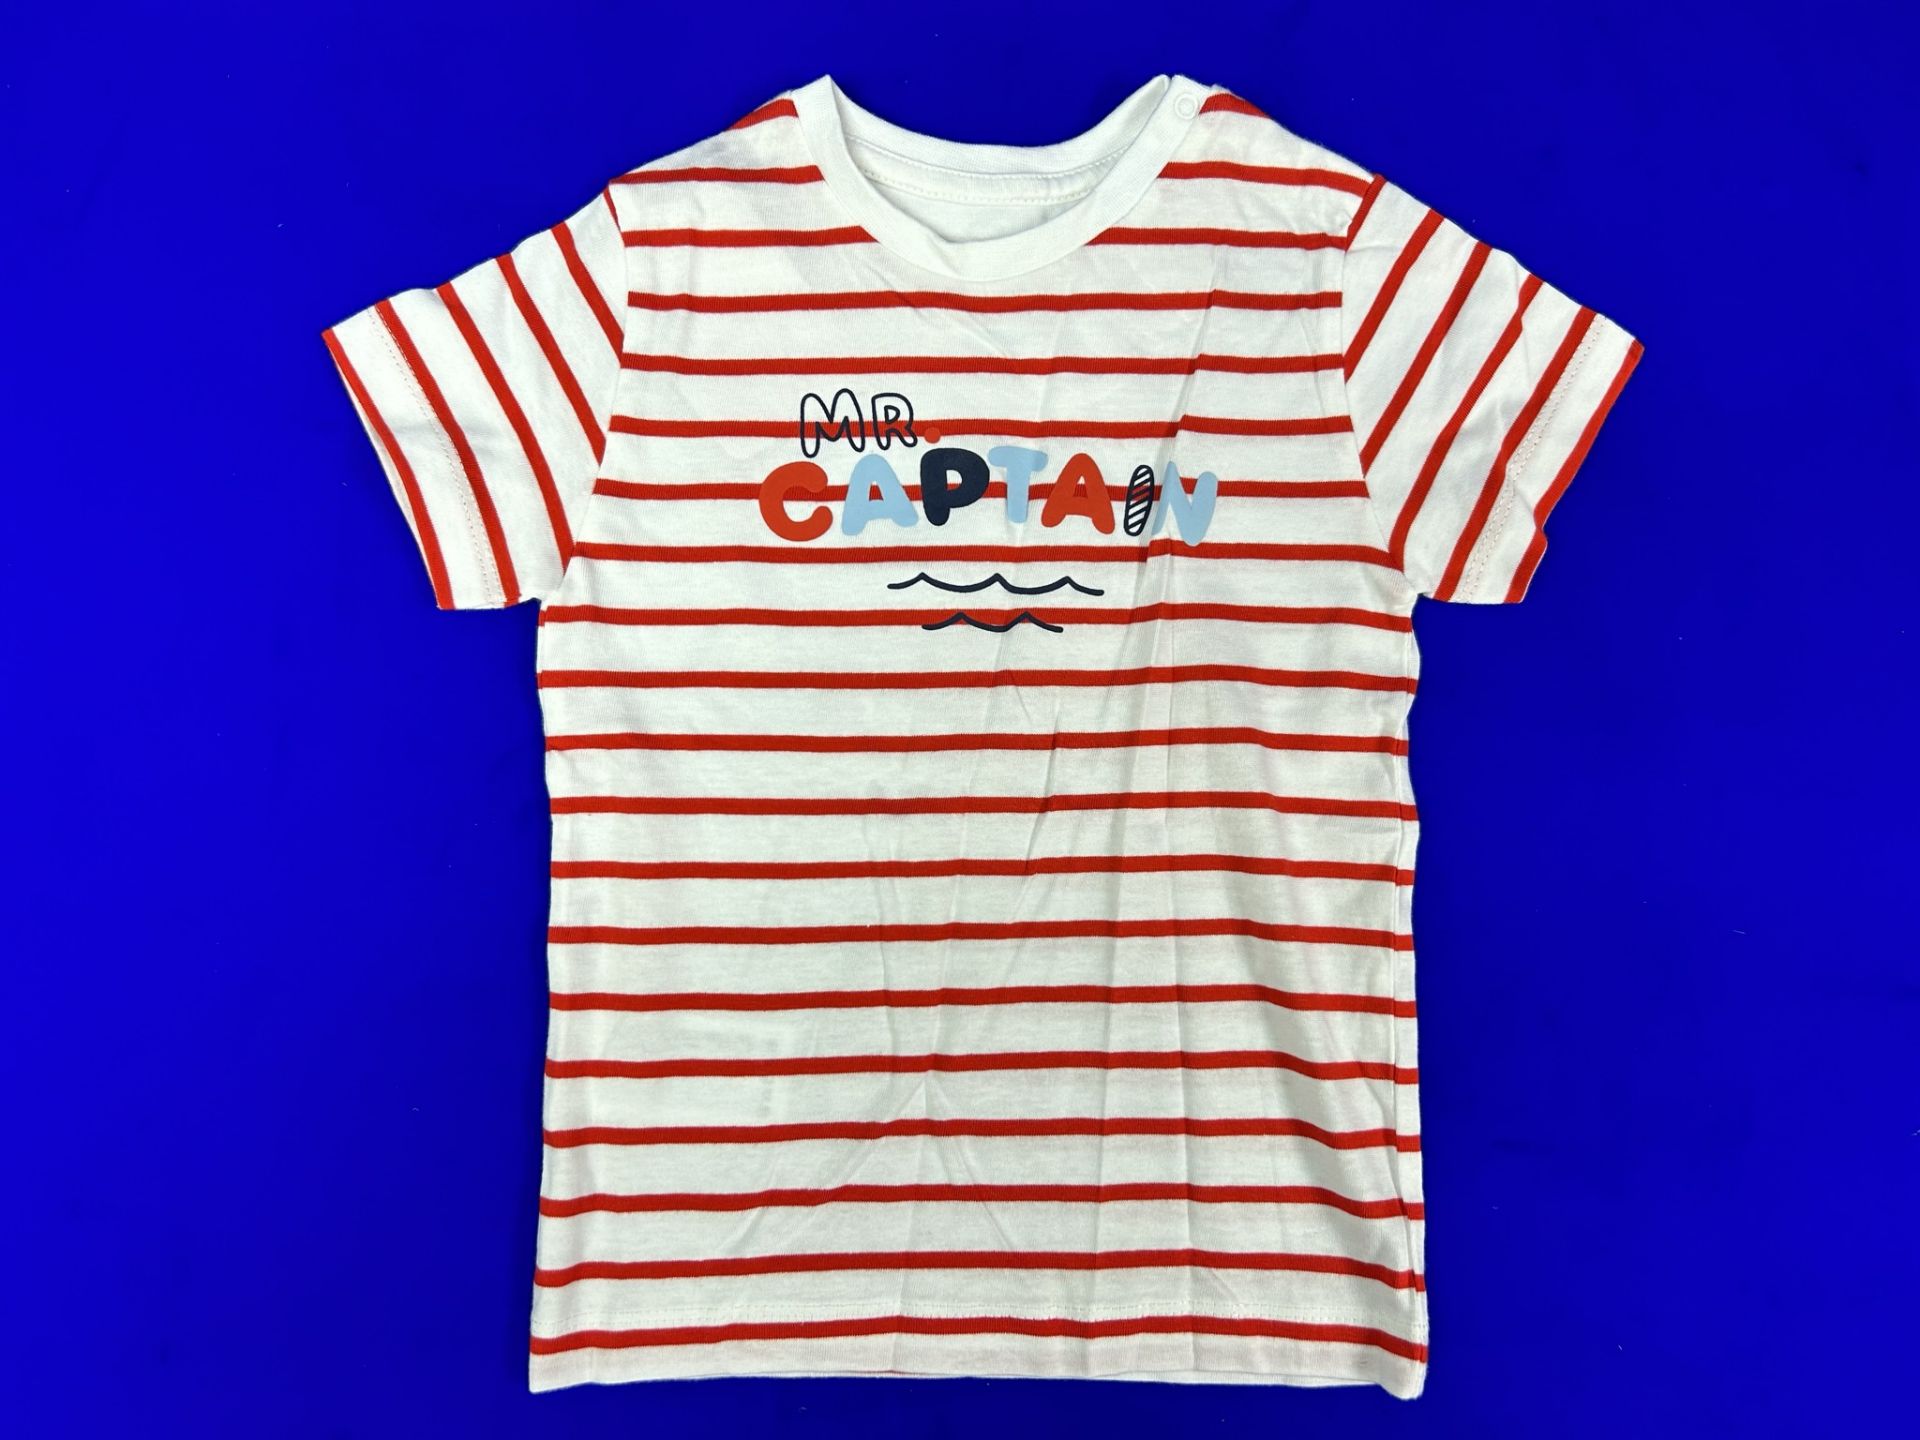 Large Quantity of Ex-Display Newborn & Children's Clothing | RRP £19,500 - £20,500 - Image 19 of 37